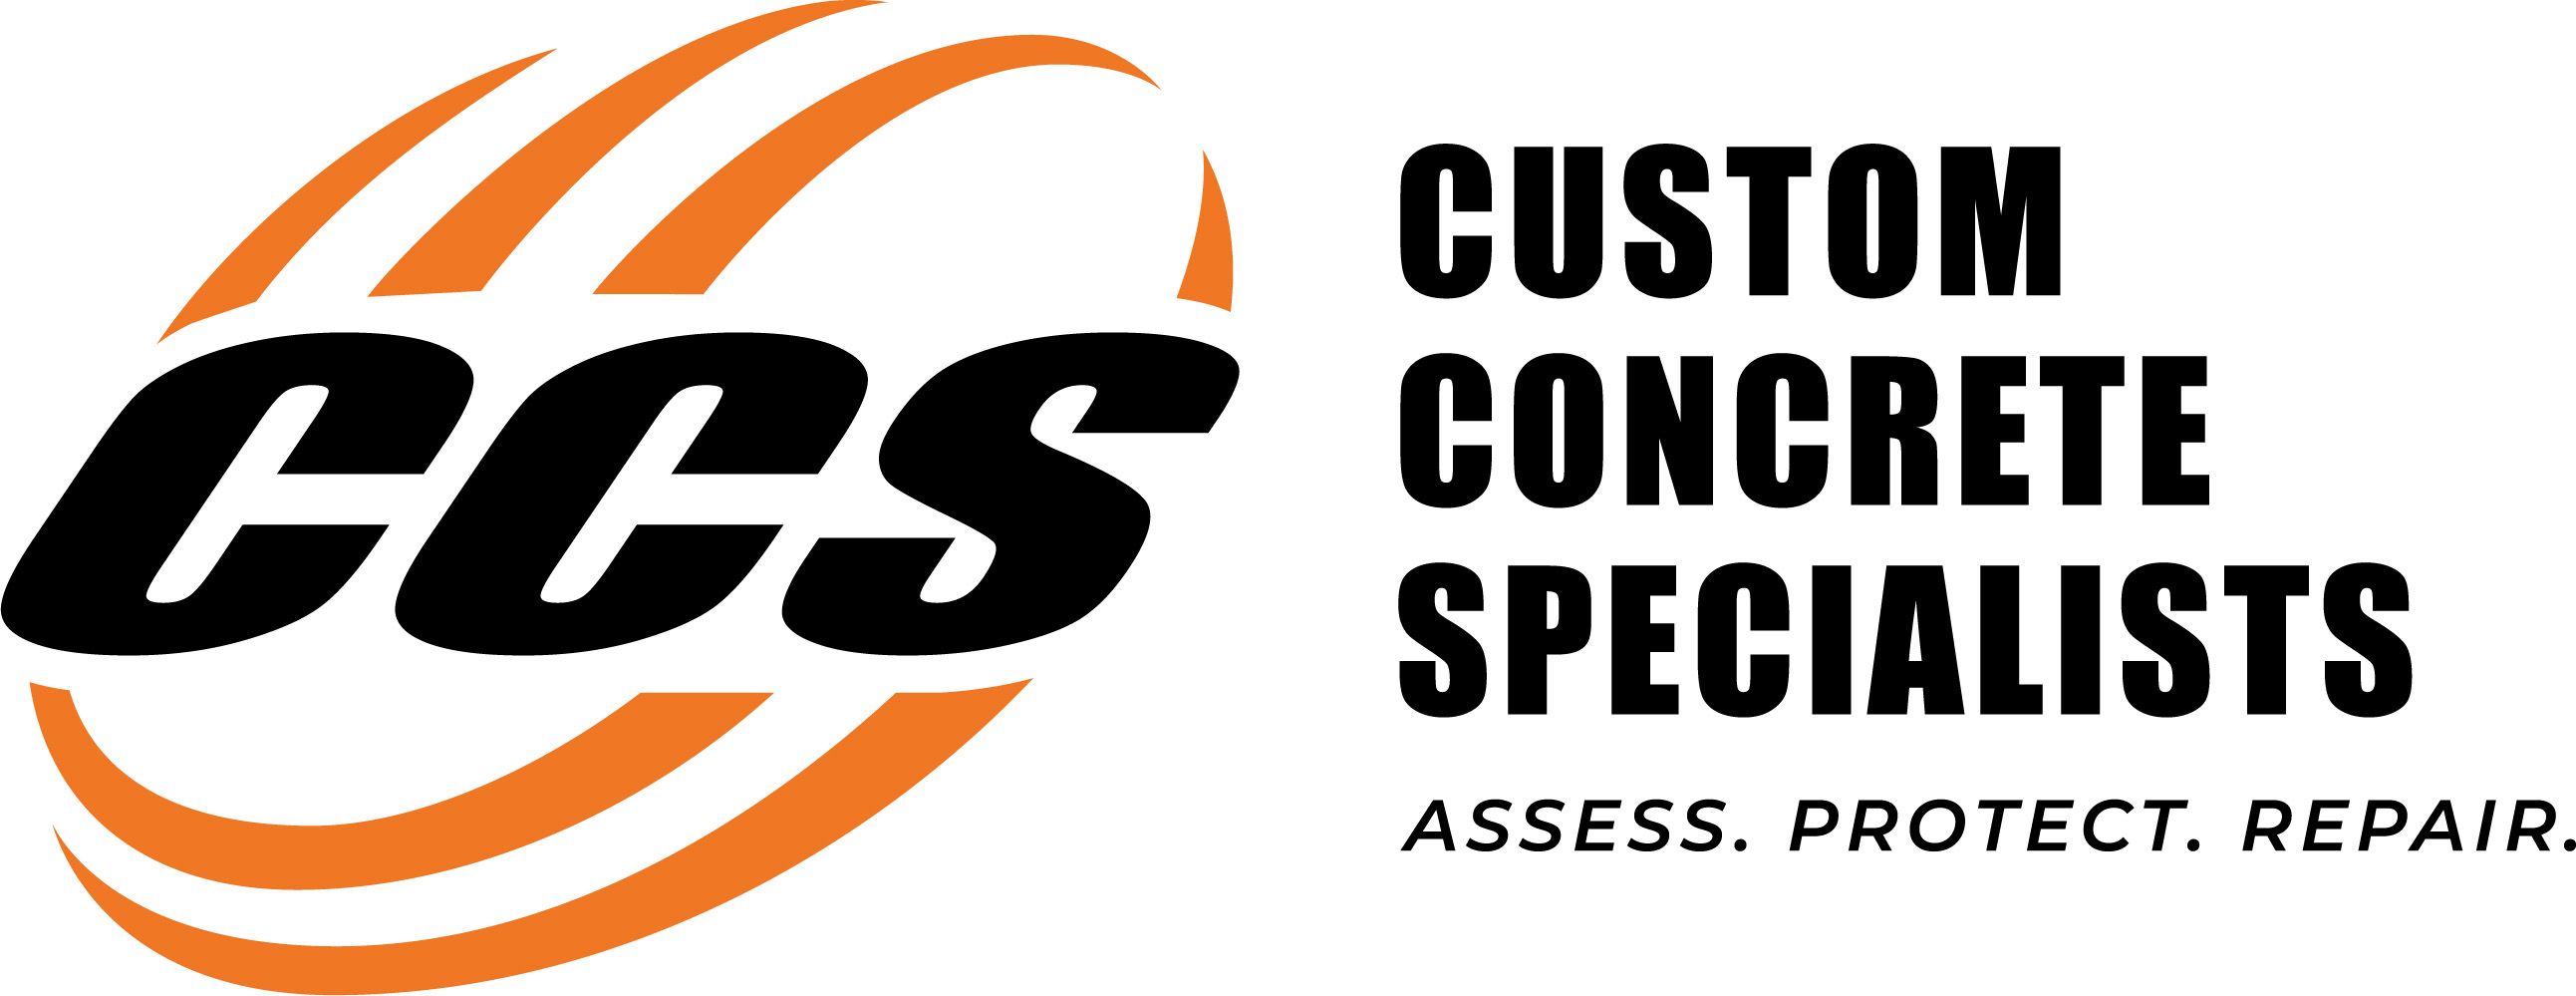 Custom Concrete Specialists